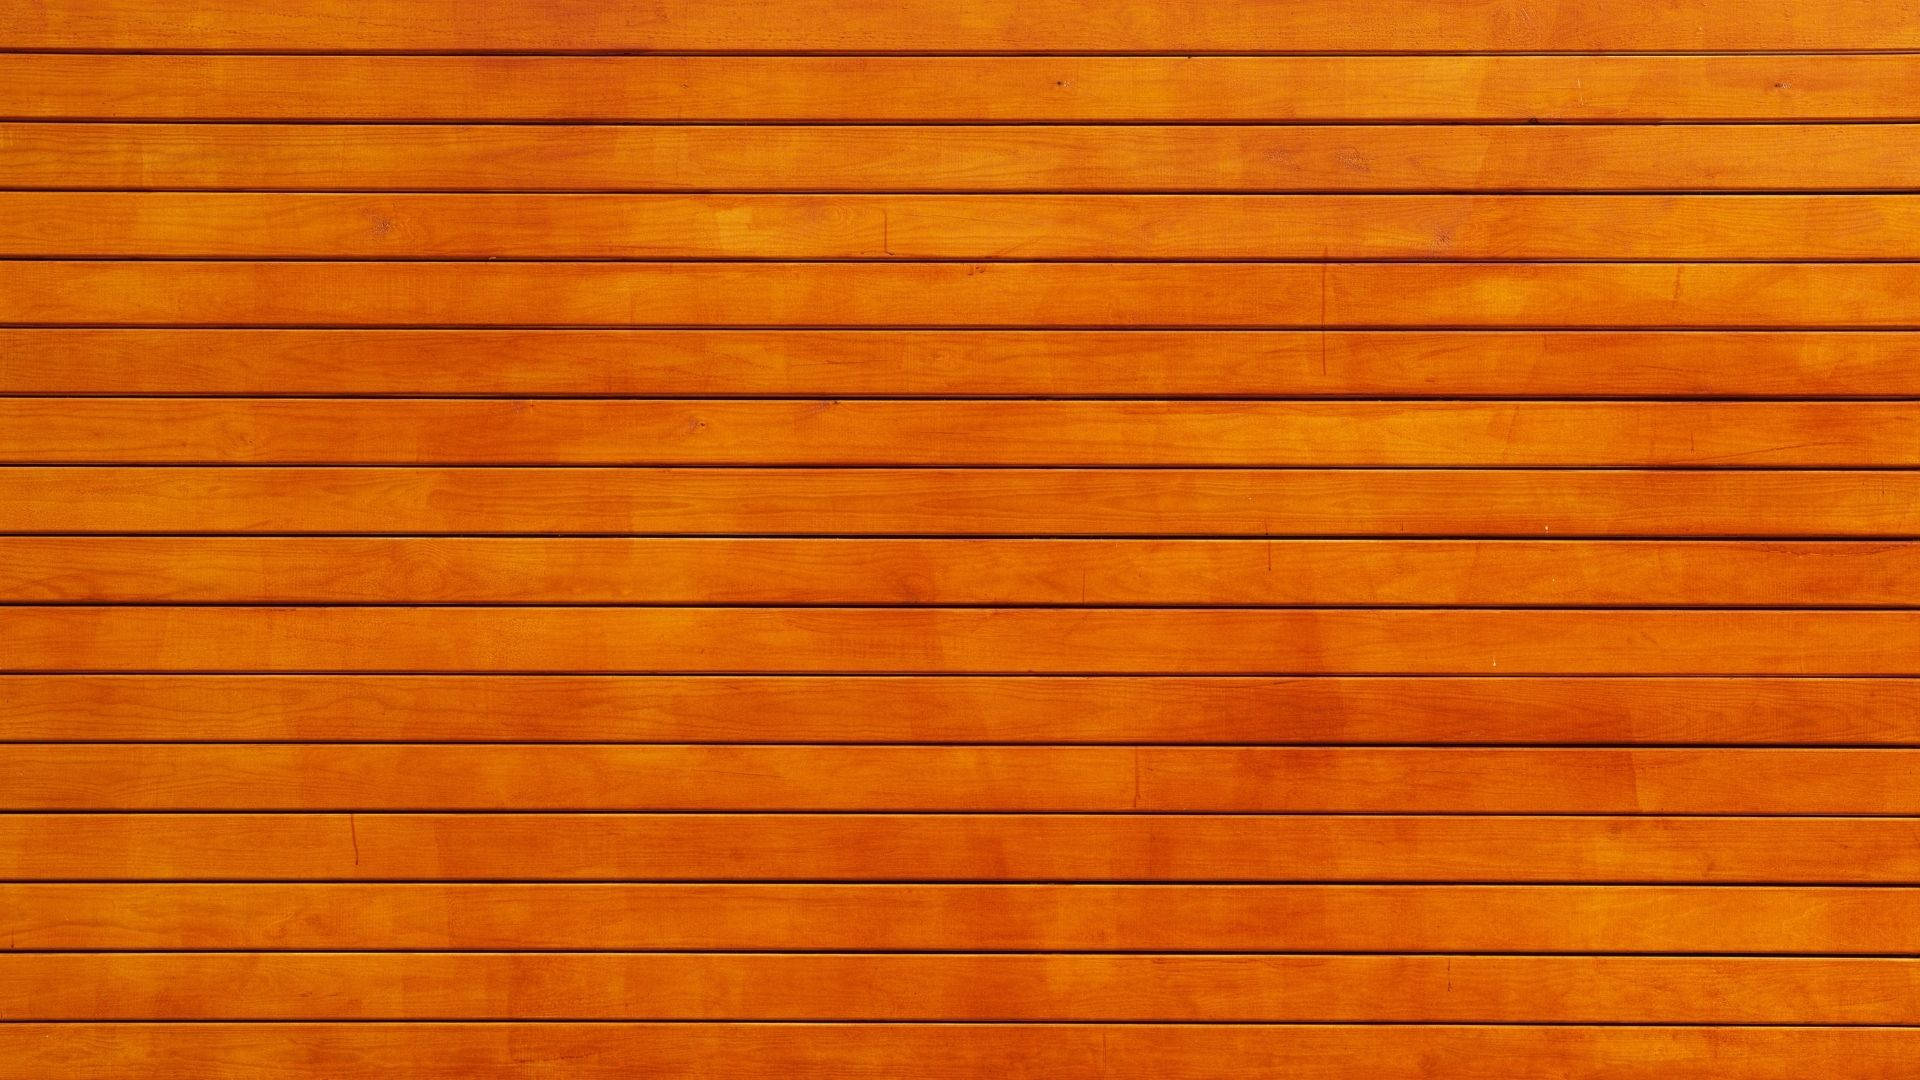 Vibrant Orange Canvas Background